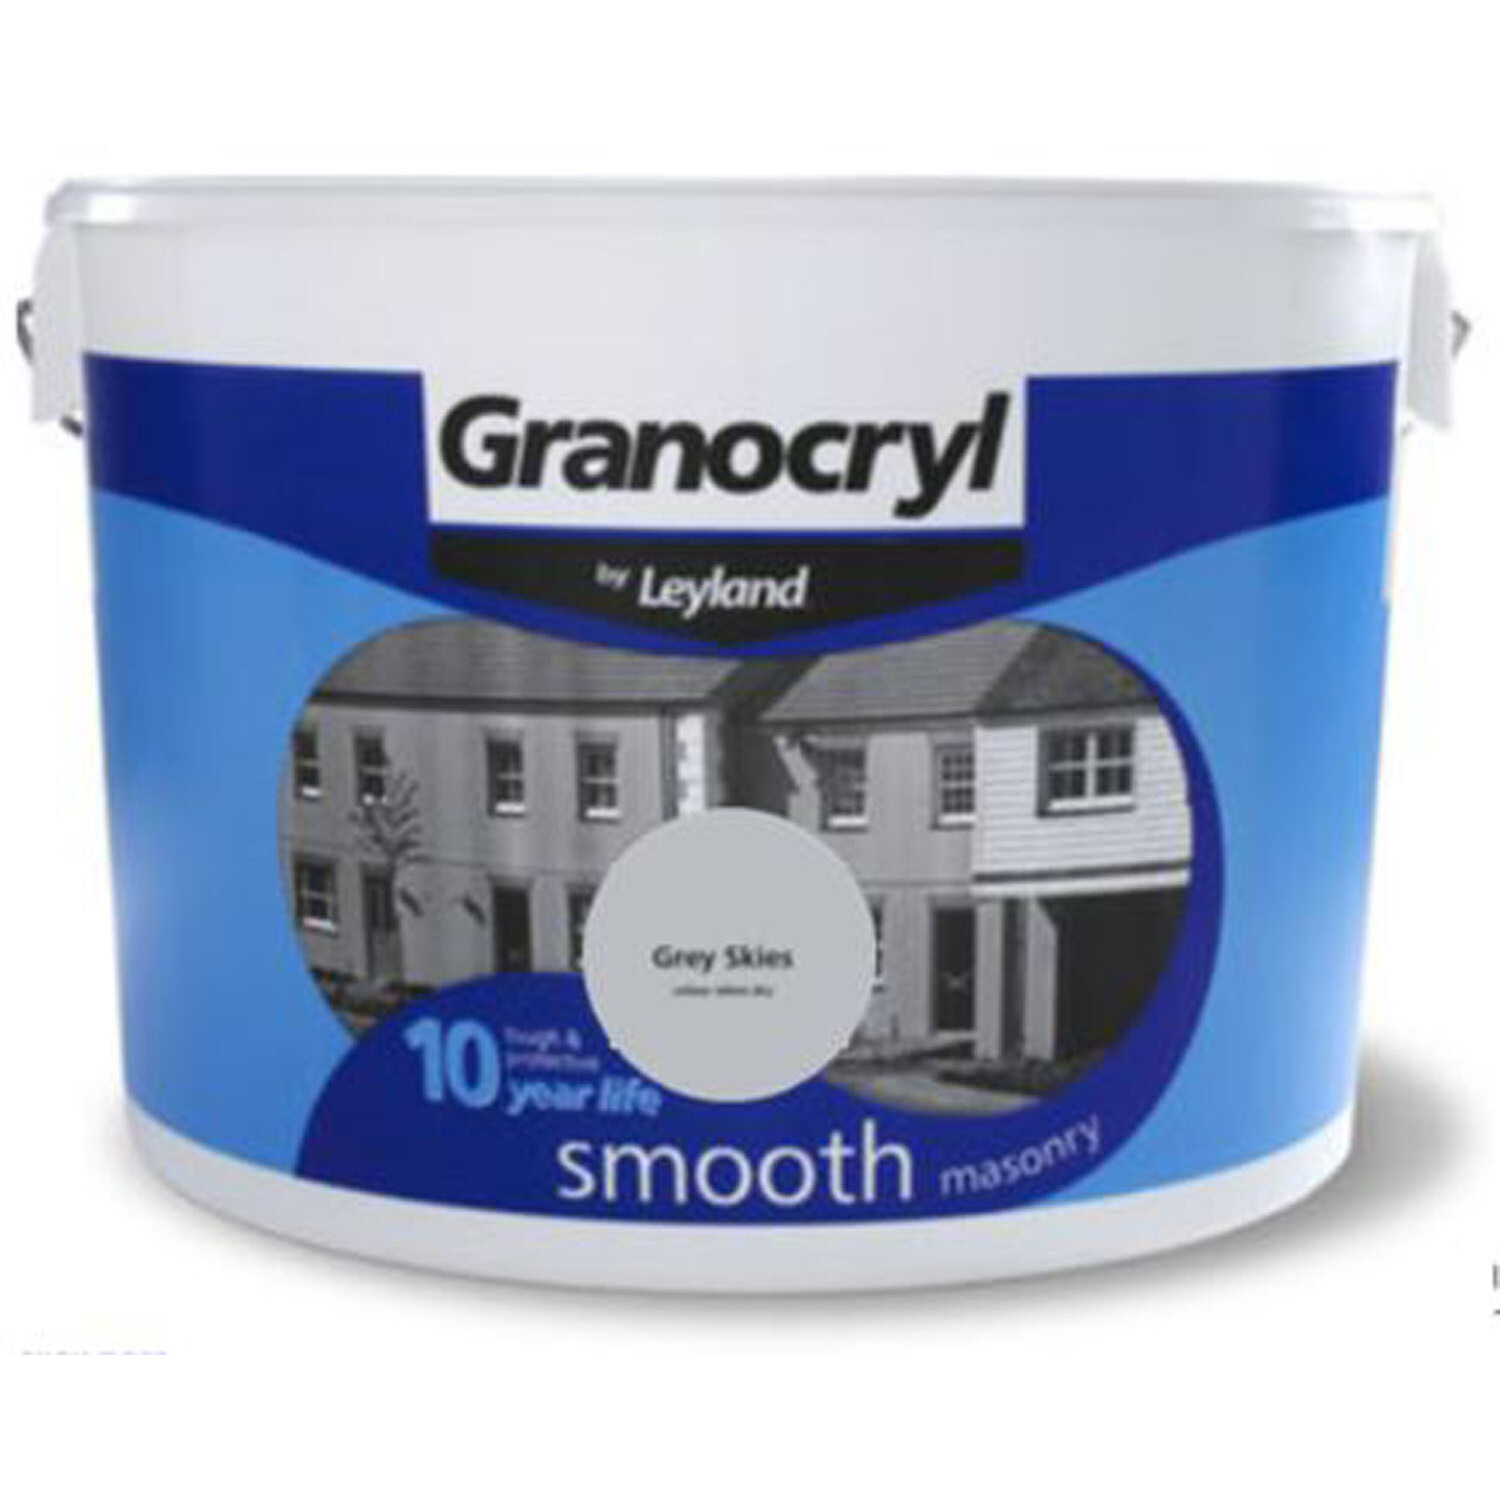 Leyland Granocryl Exterior Walls Grey Skies Smooth Masonry Paint 10L Image